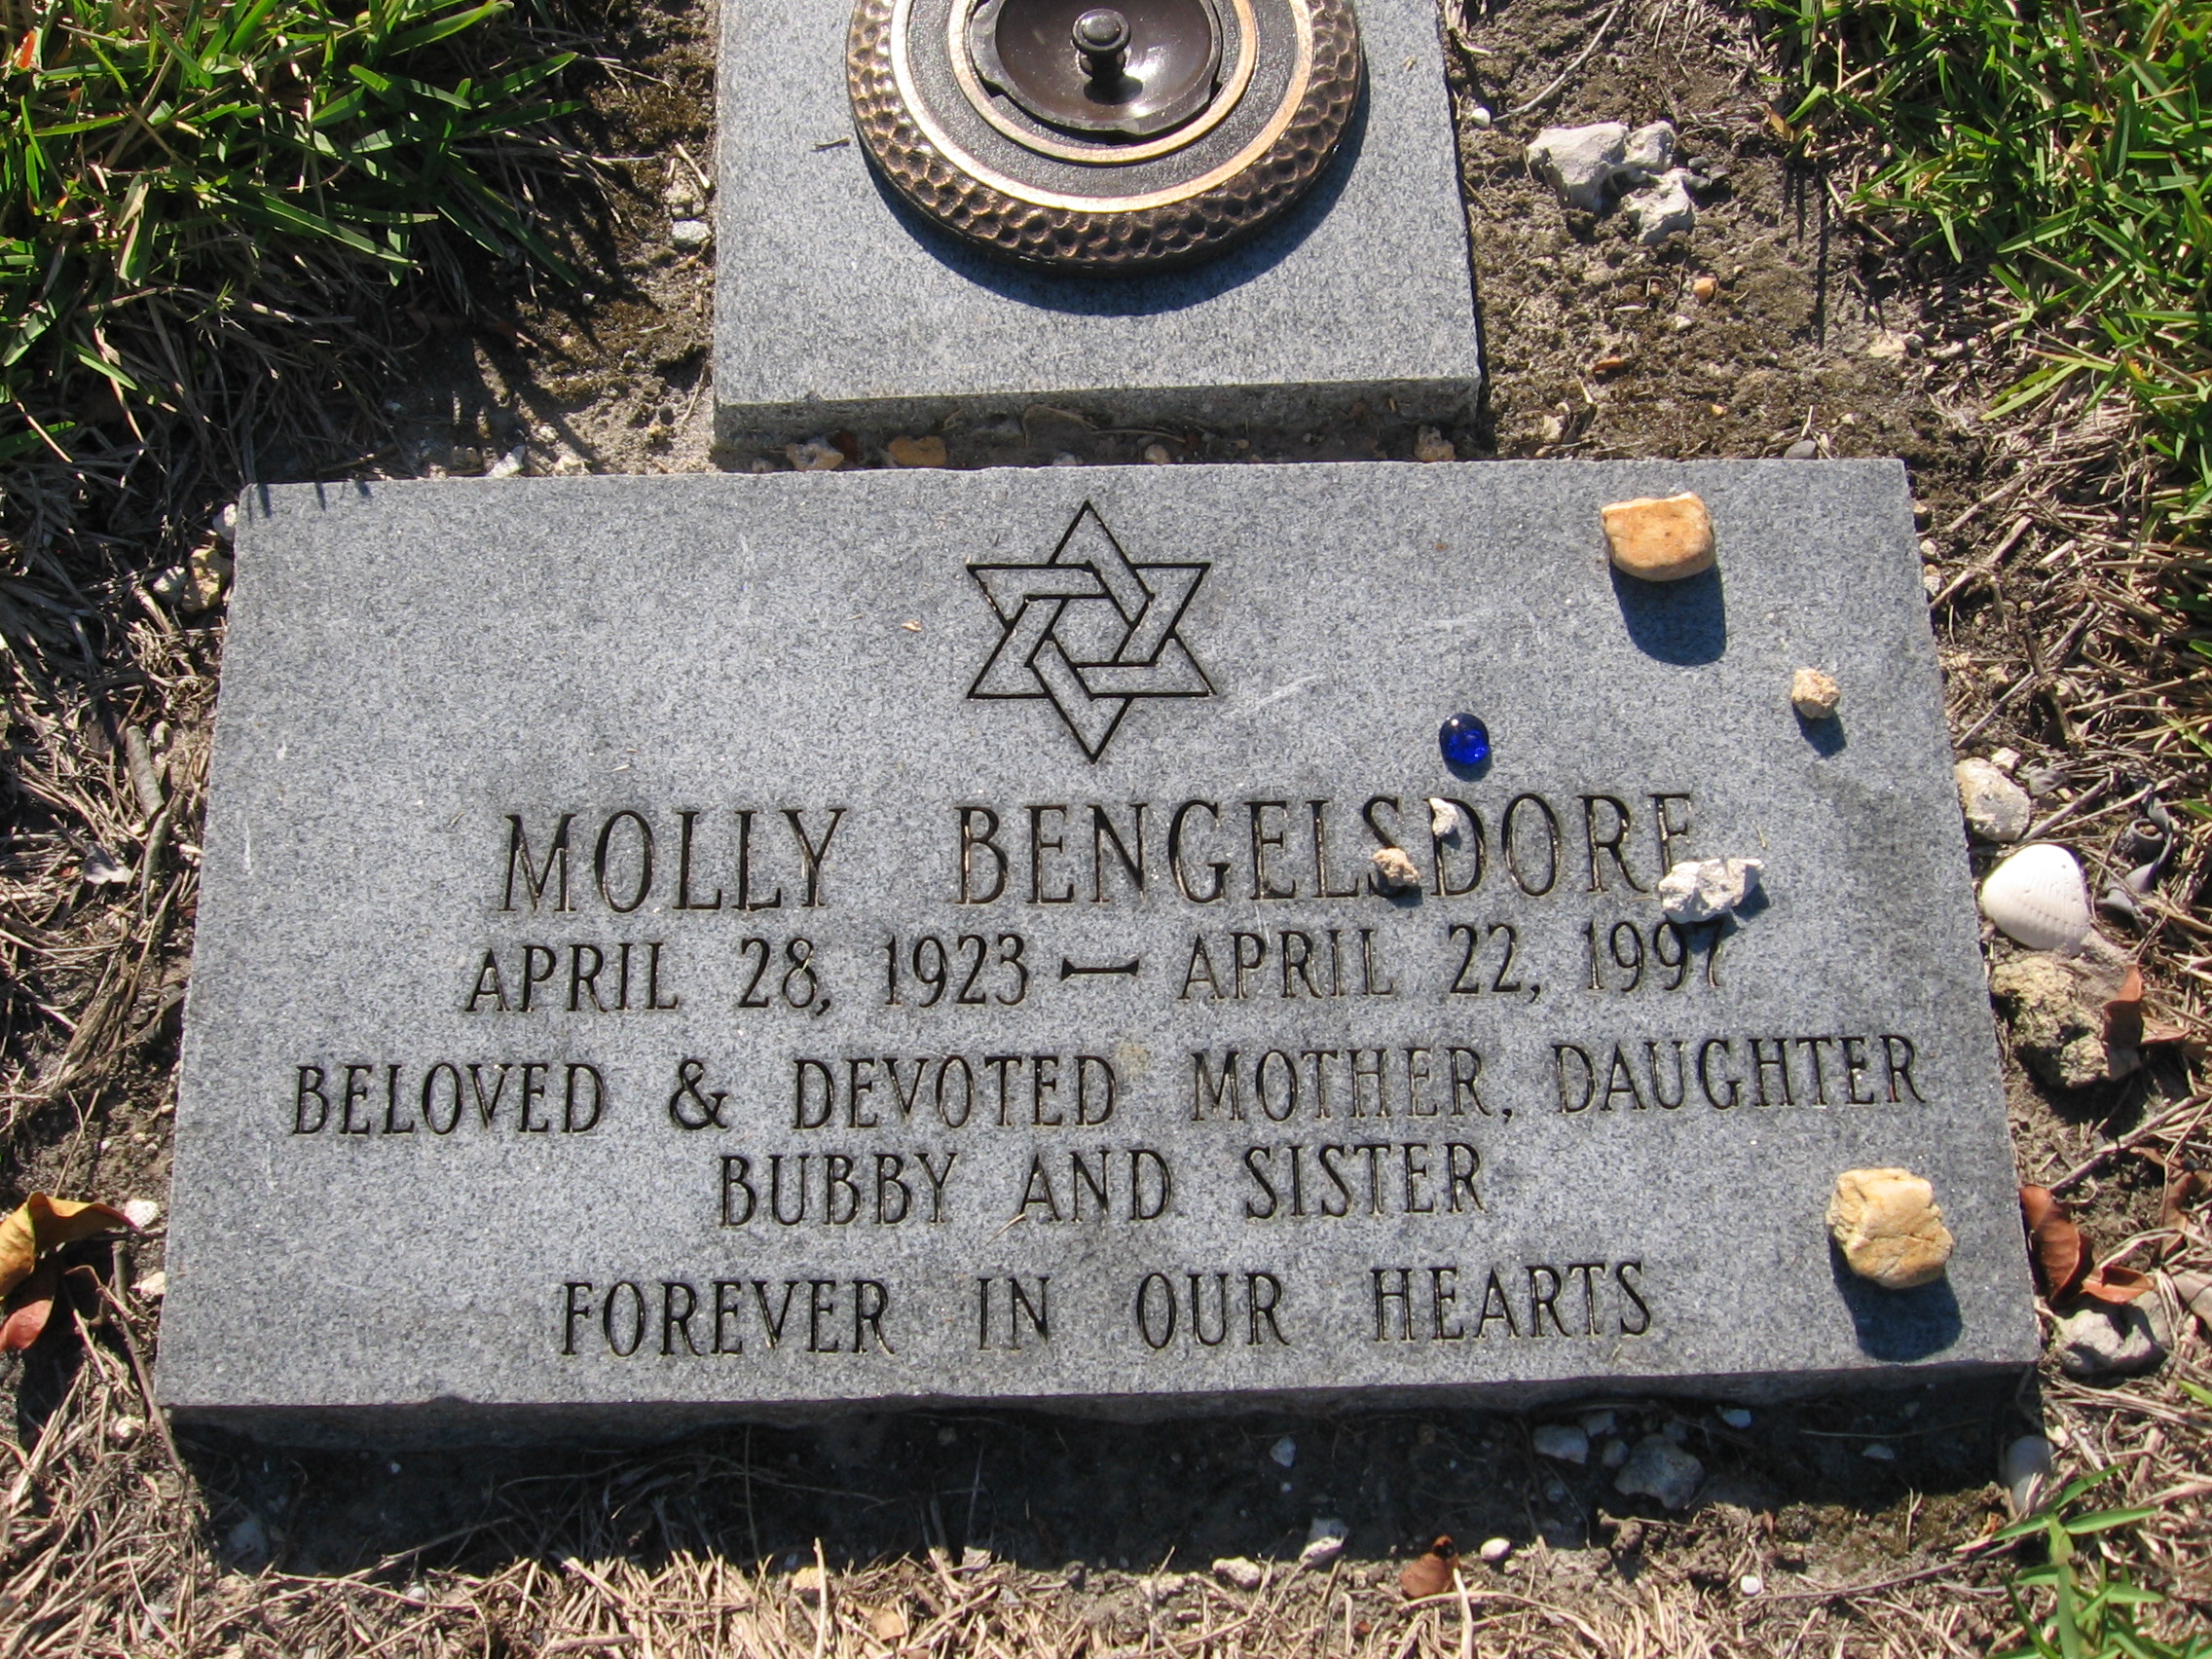 Molly Bengelsdorf